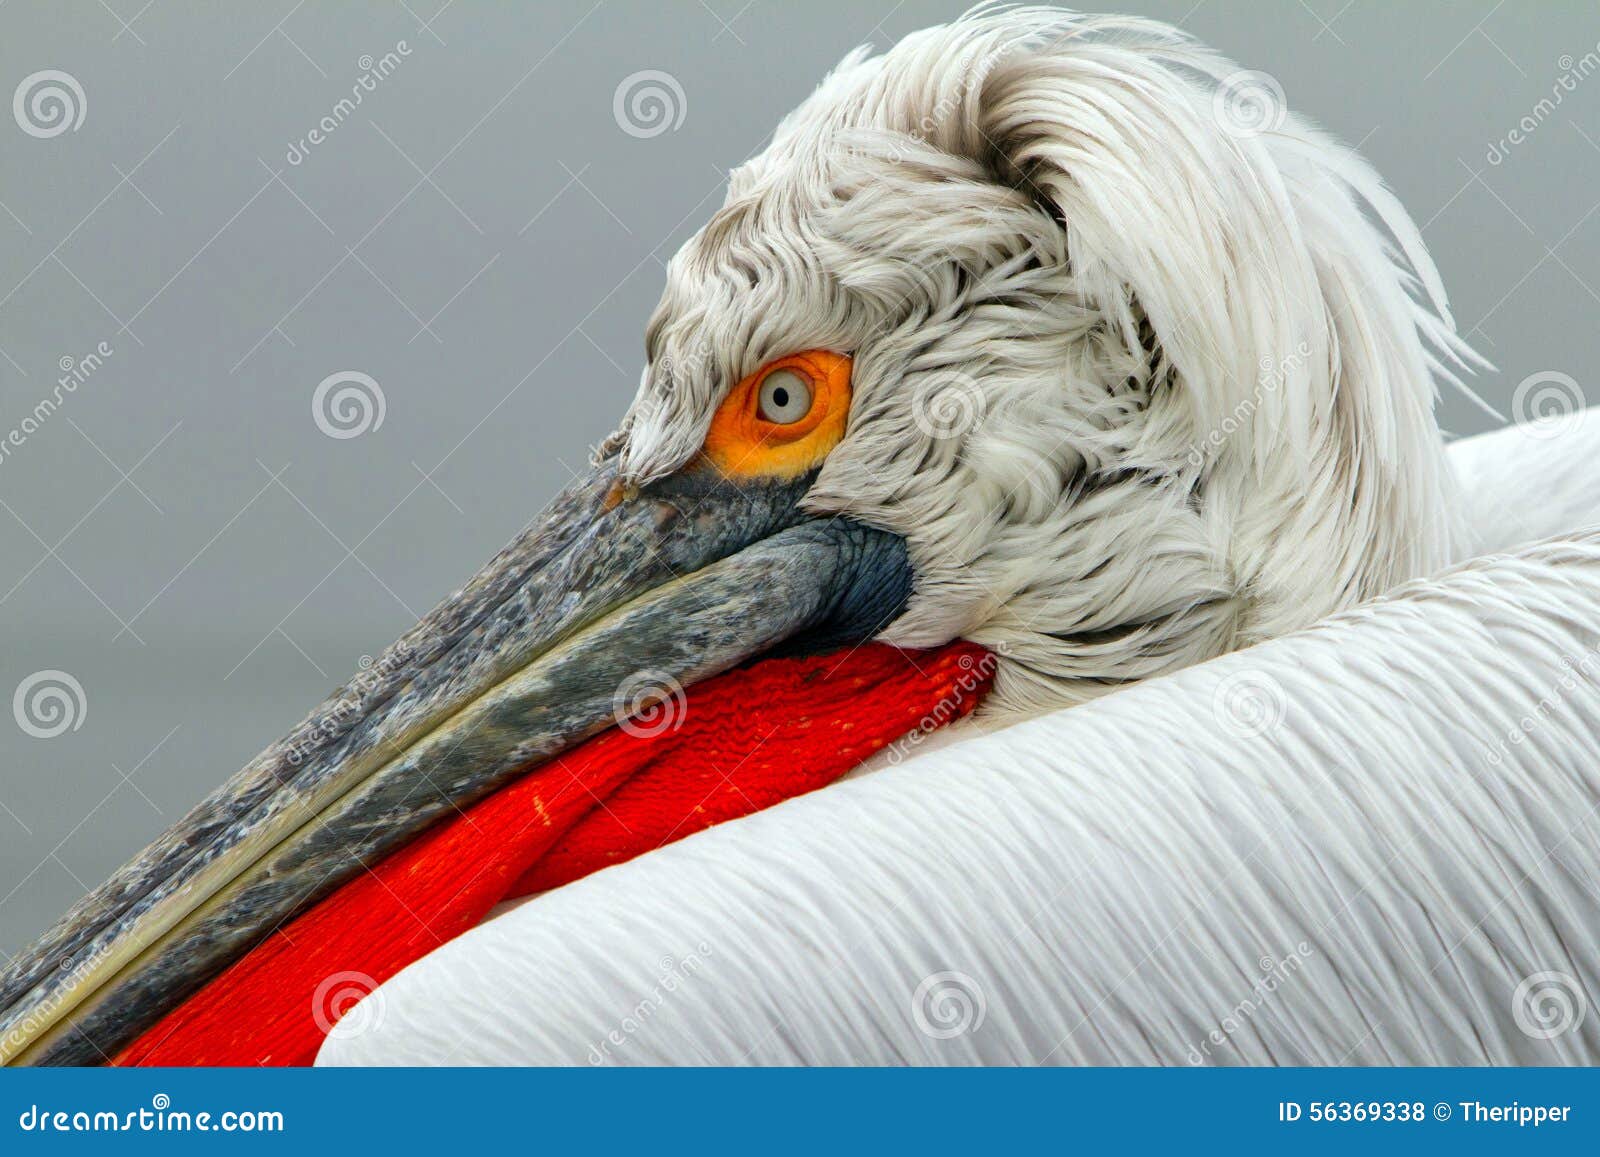 dalmatian pelican